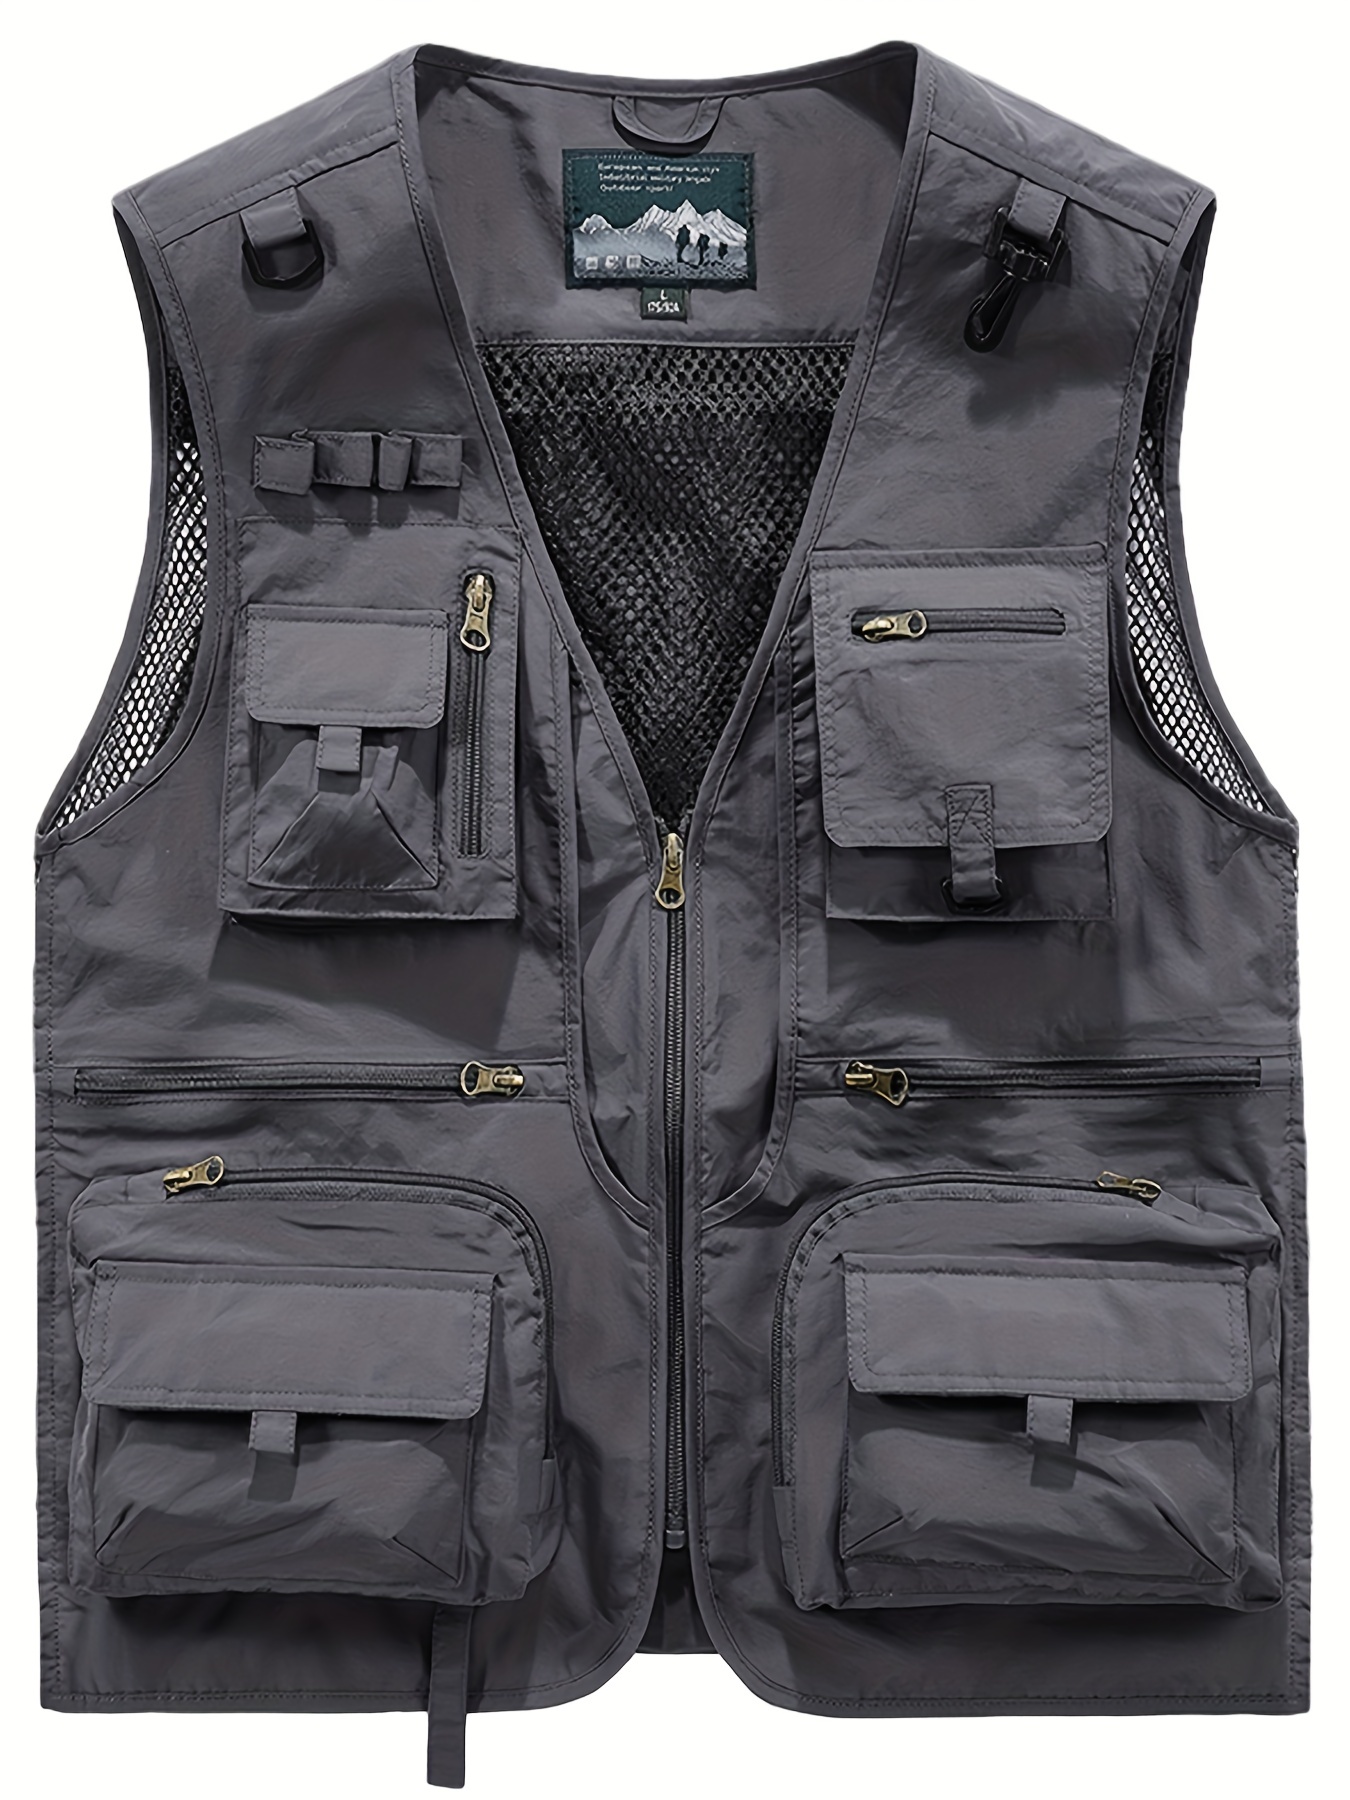 Wreesh Mens Cargo Vest Jacket Quick Drying Hiking Vest Breathable Mesh Work Vest Fishing Vests with Multi Pockets Black B, Men's, Size: Large